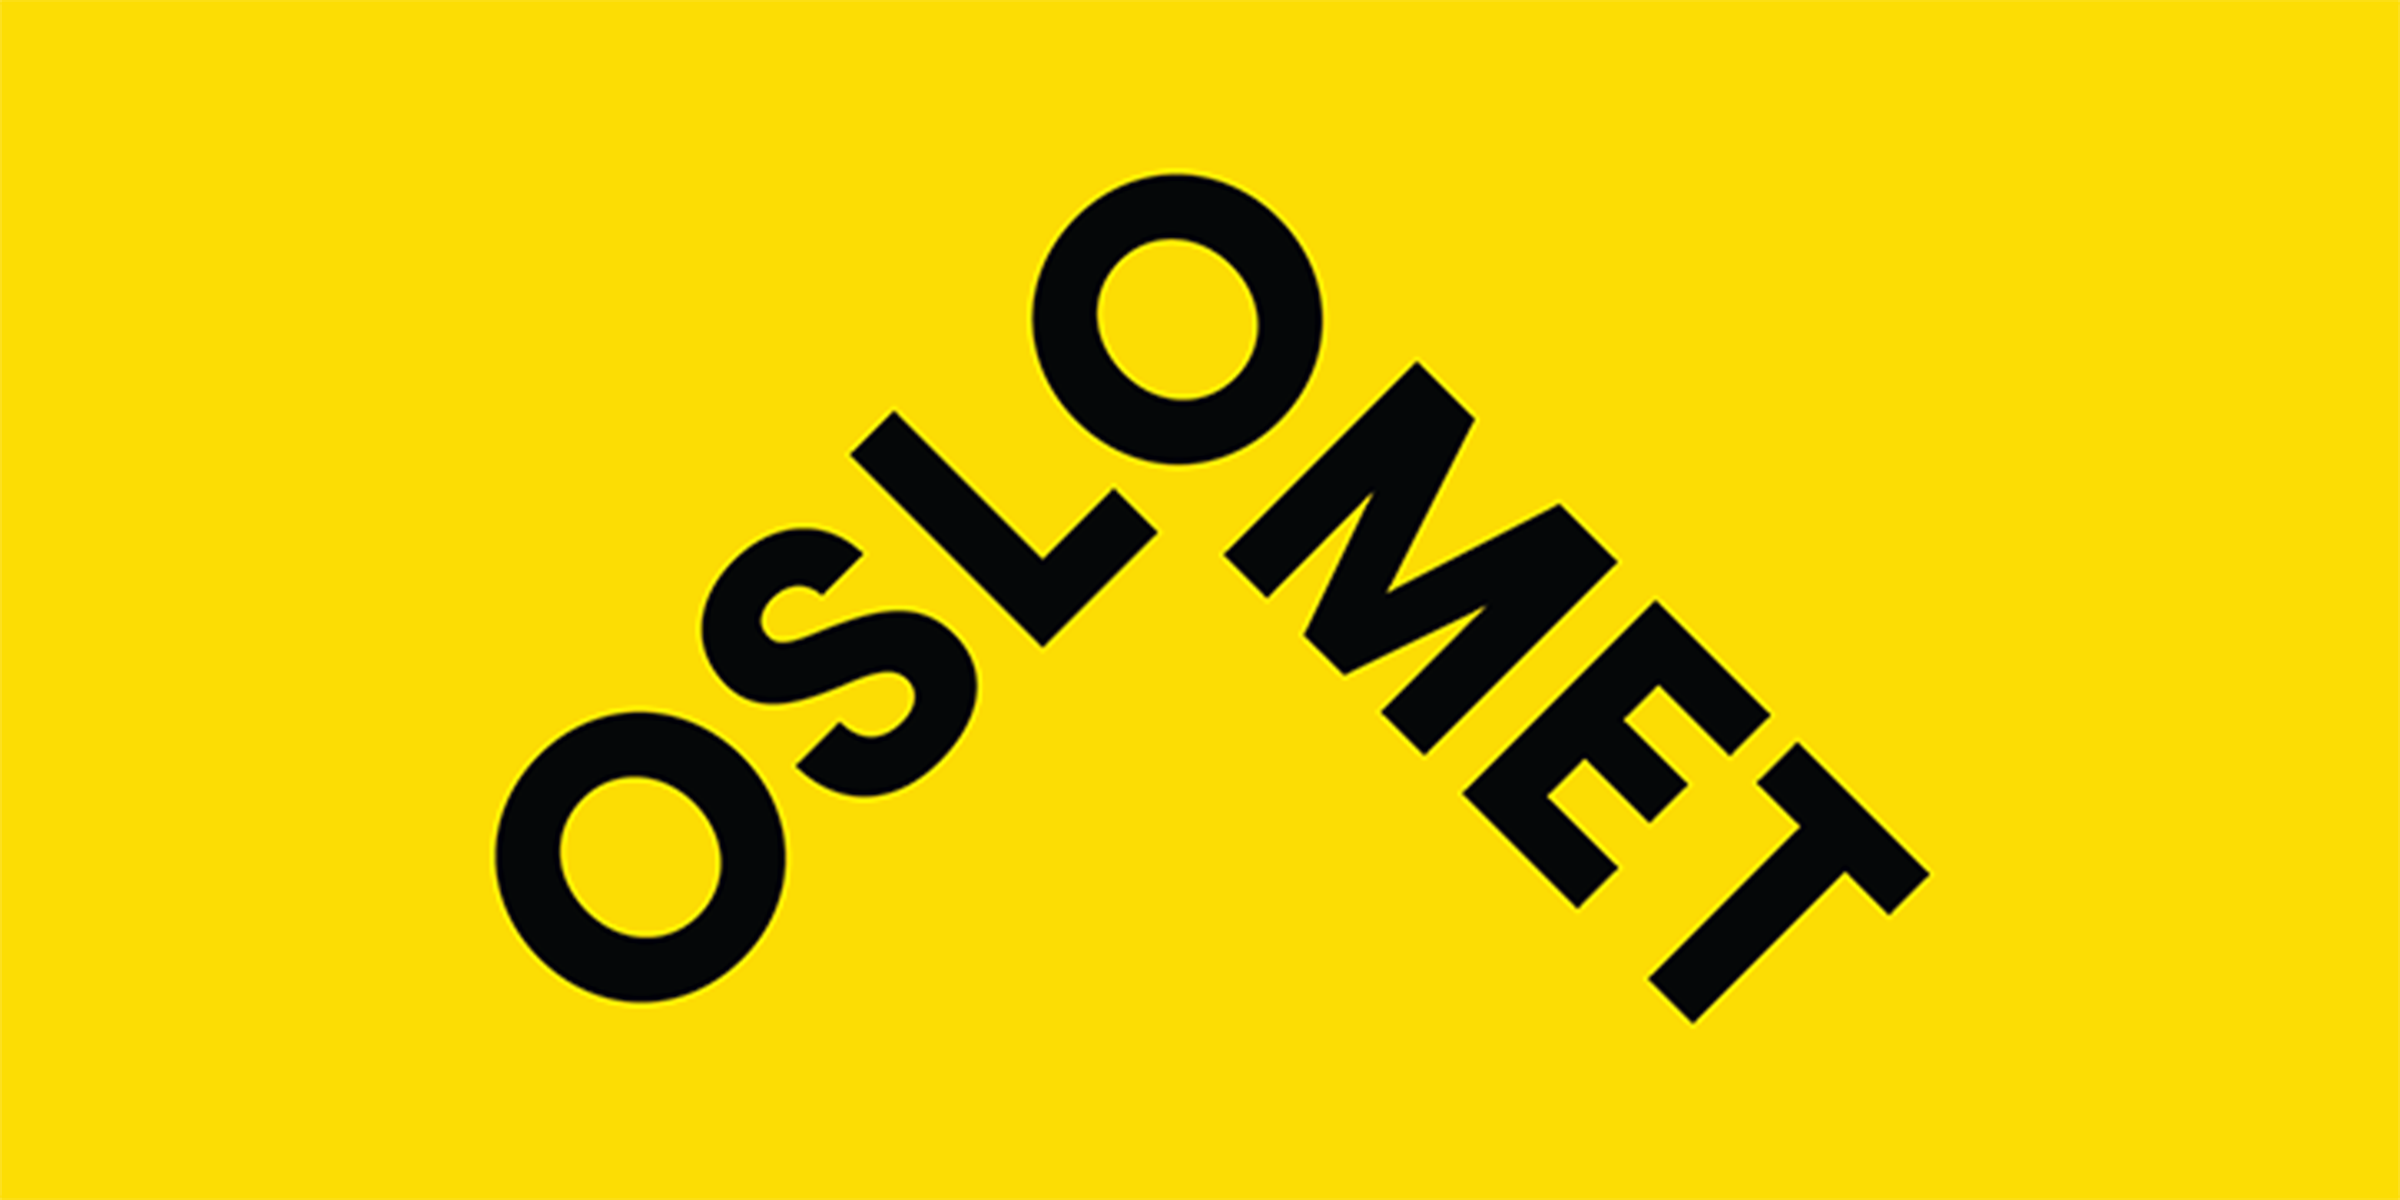 OsloMet logo with yellow background.